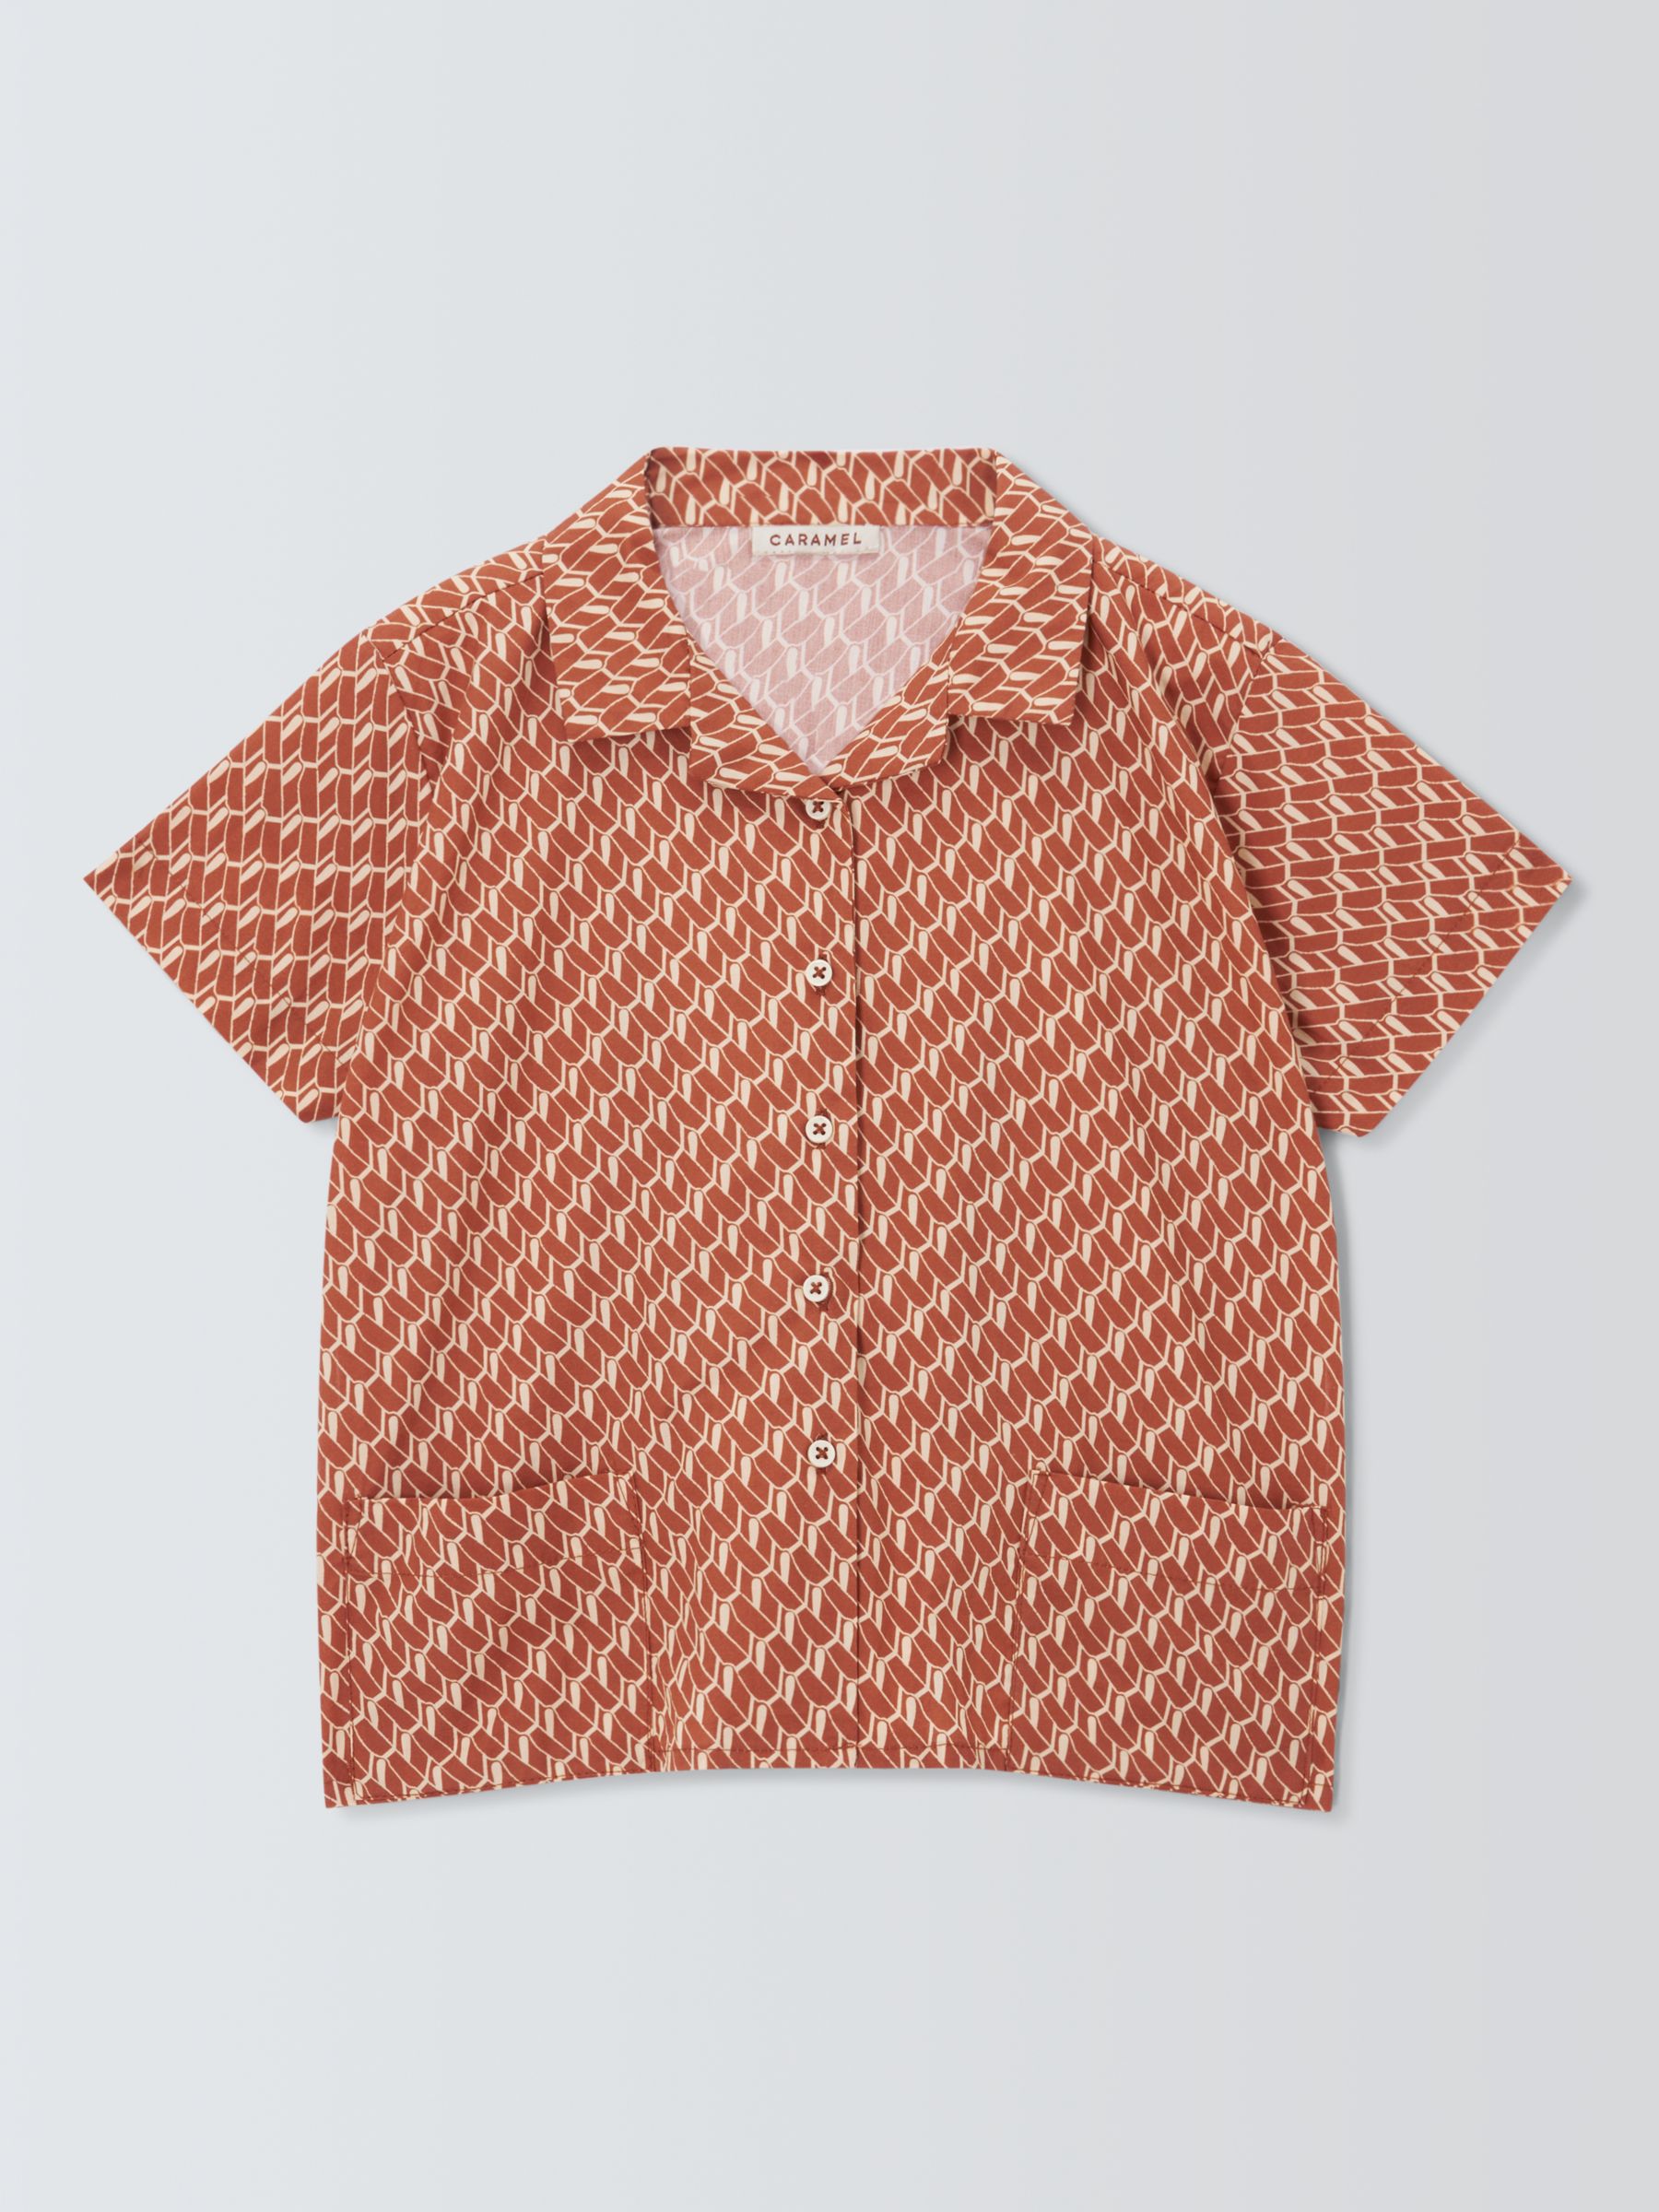 Caramel Kids' Bamboo Geometric Shirt, Orange, 3 years